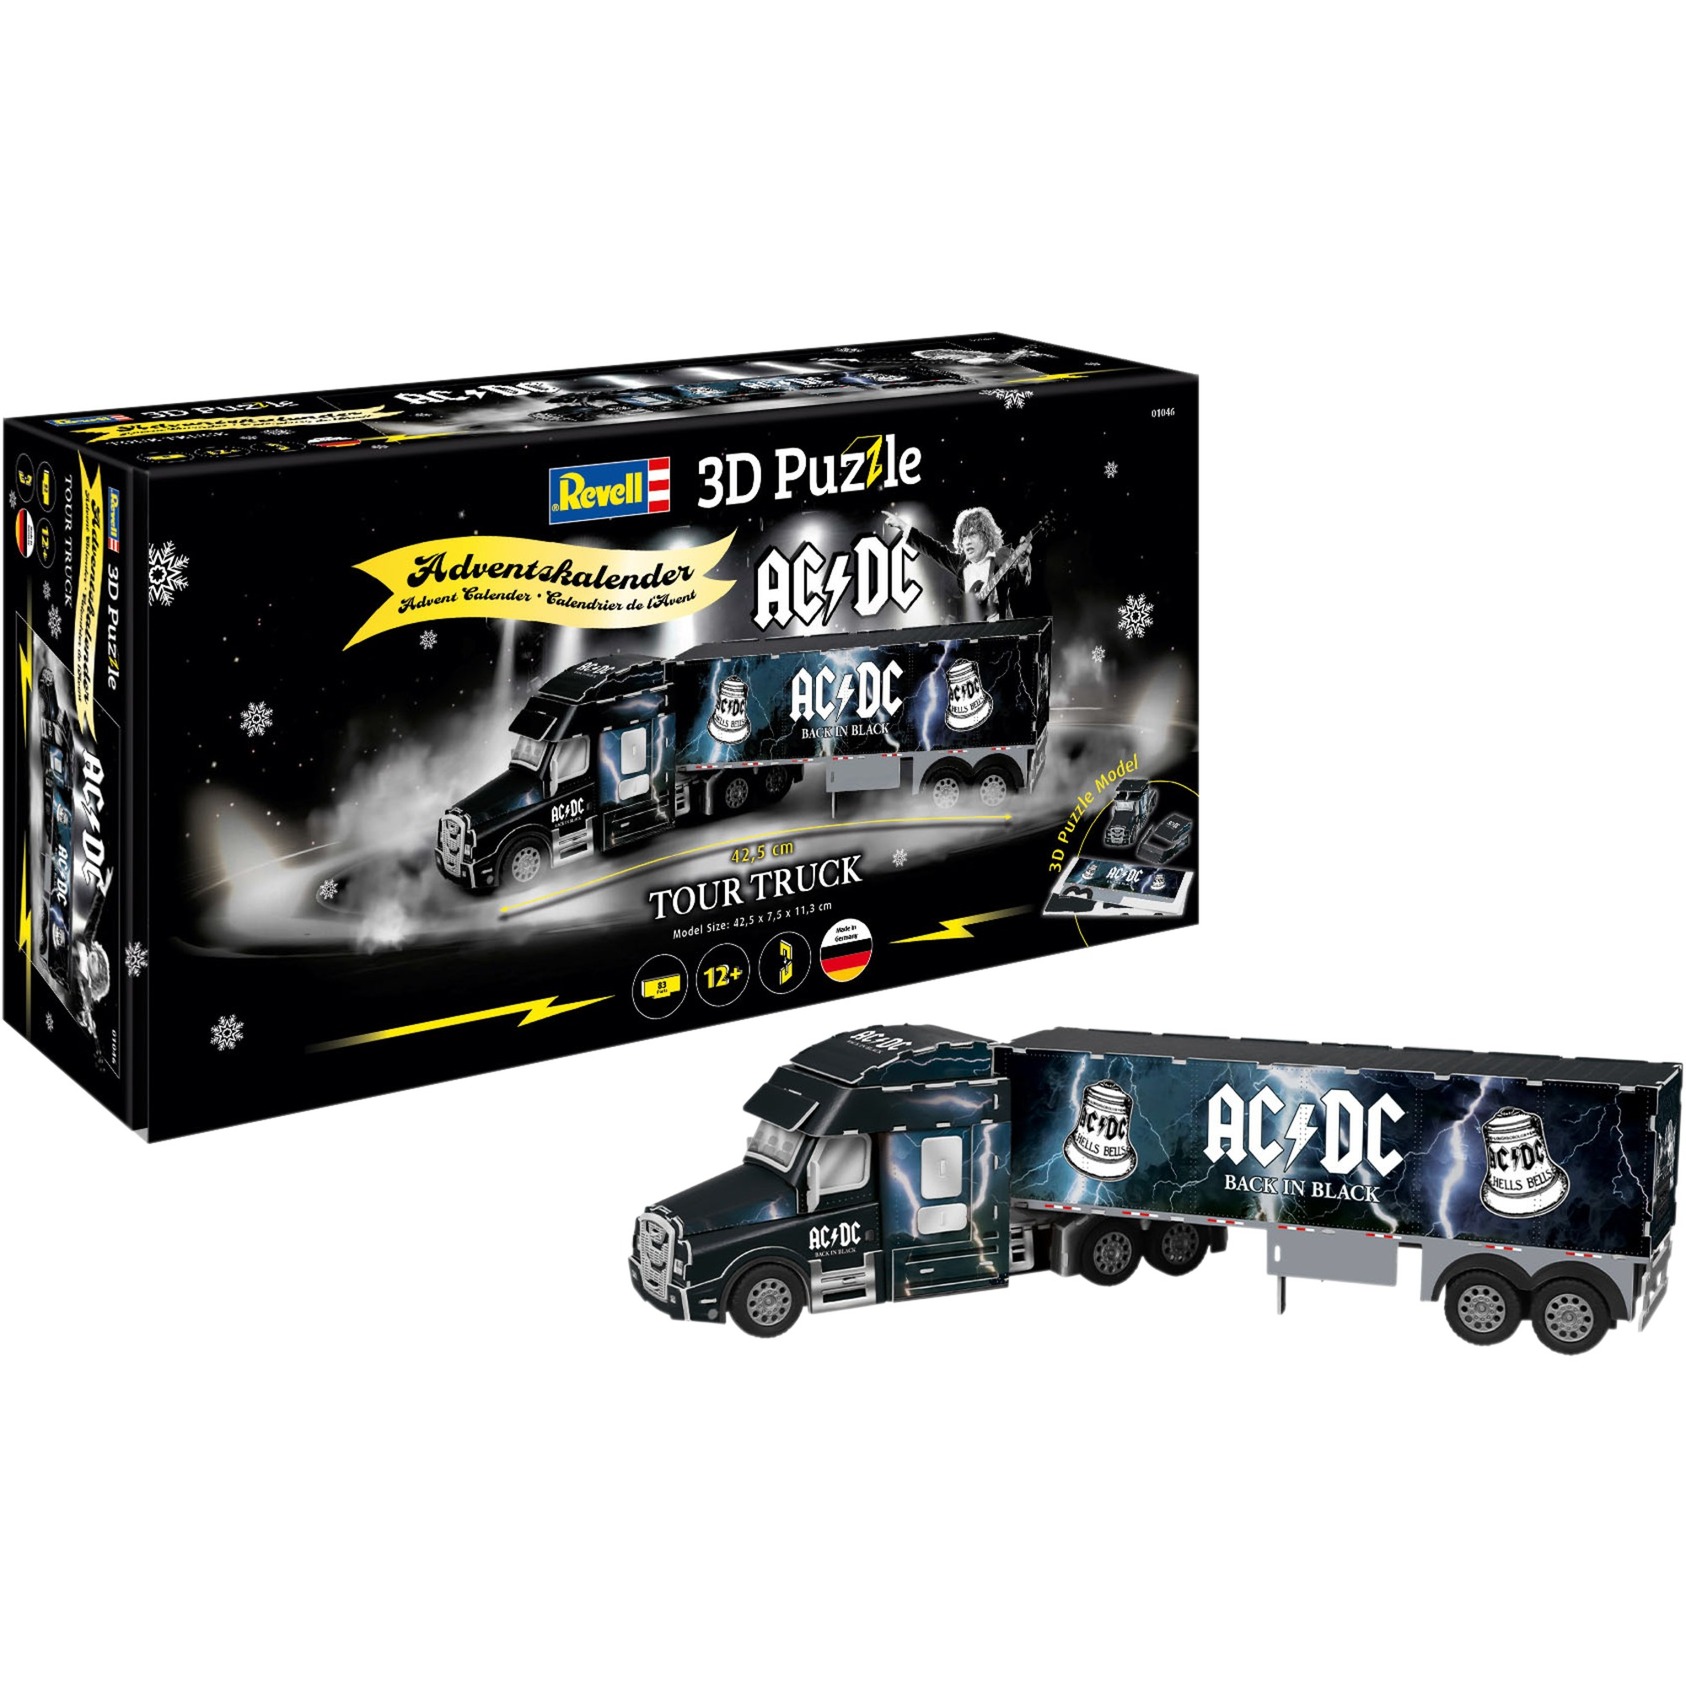 3D-Puzzle Adventskalender AC/DC Tour Truck von Revell